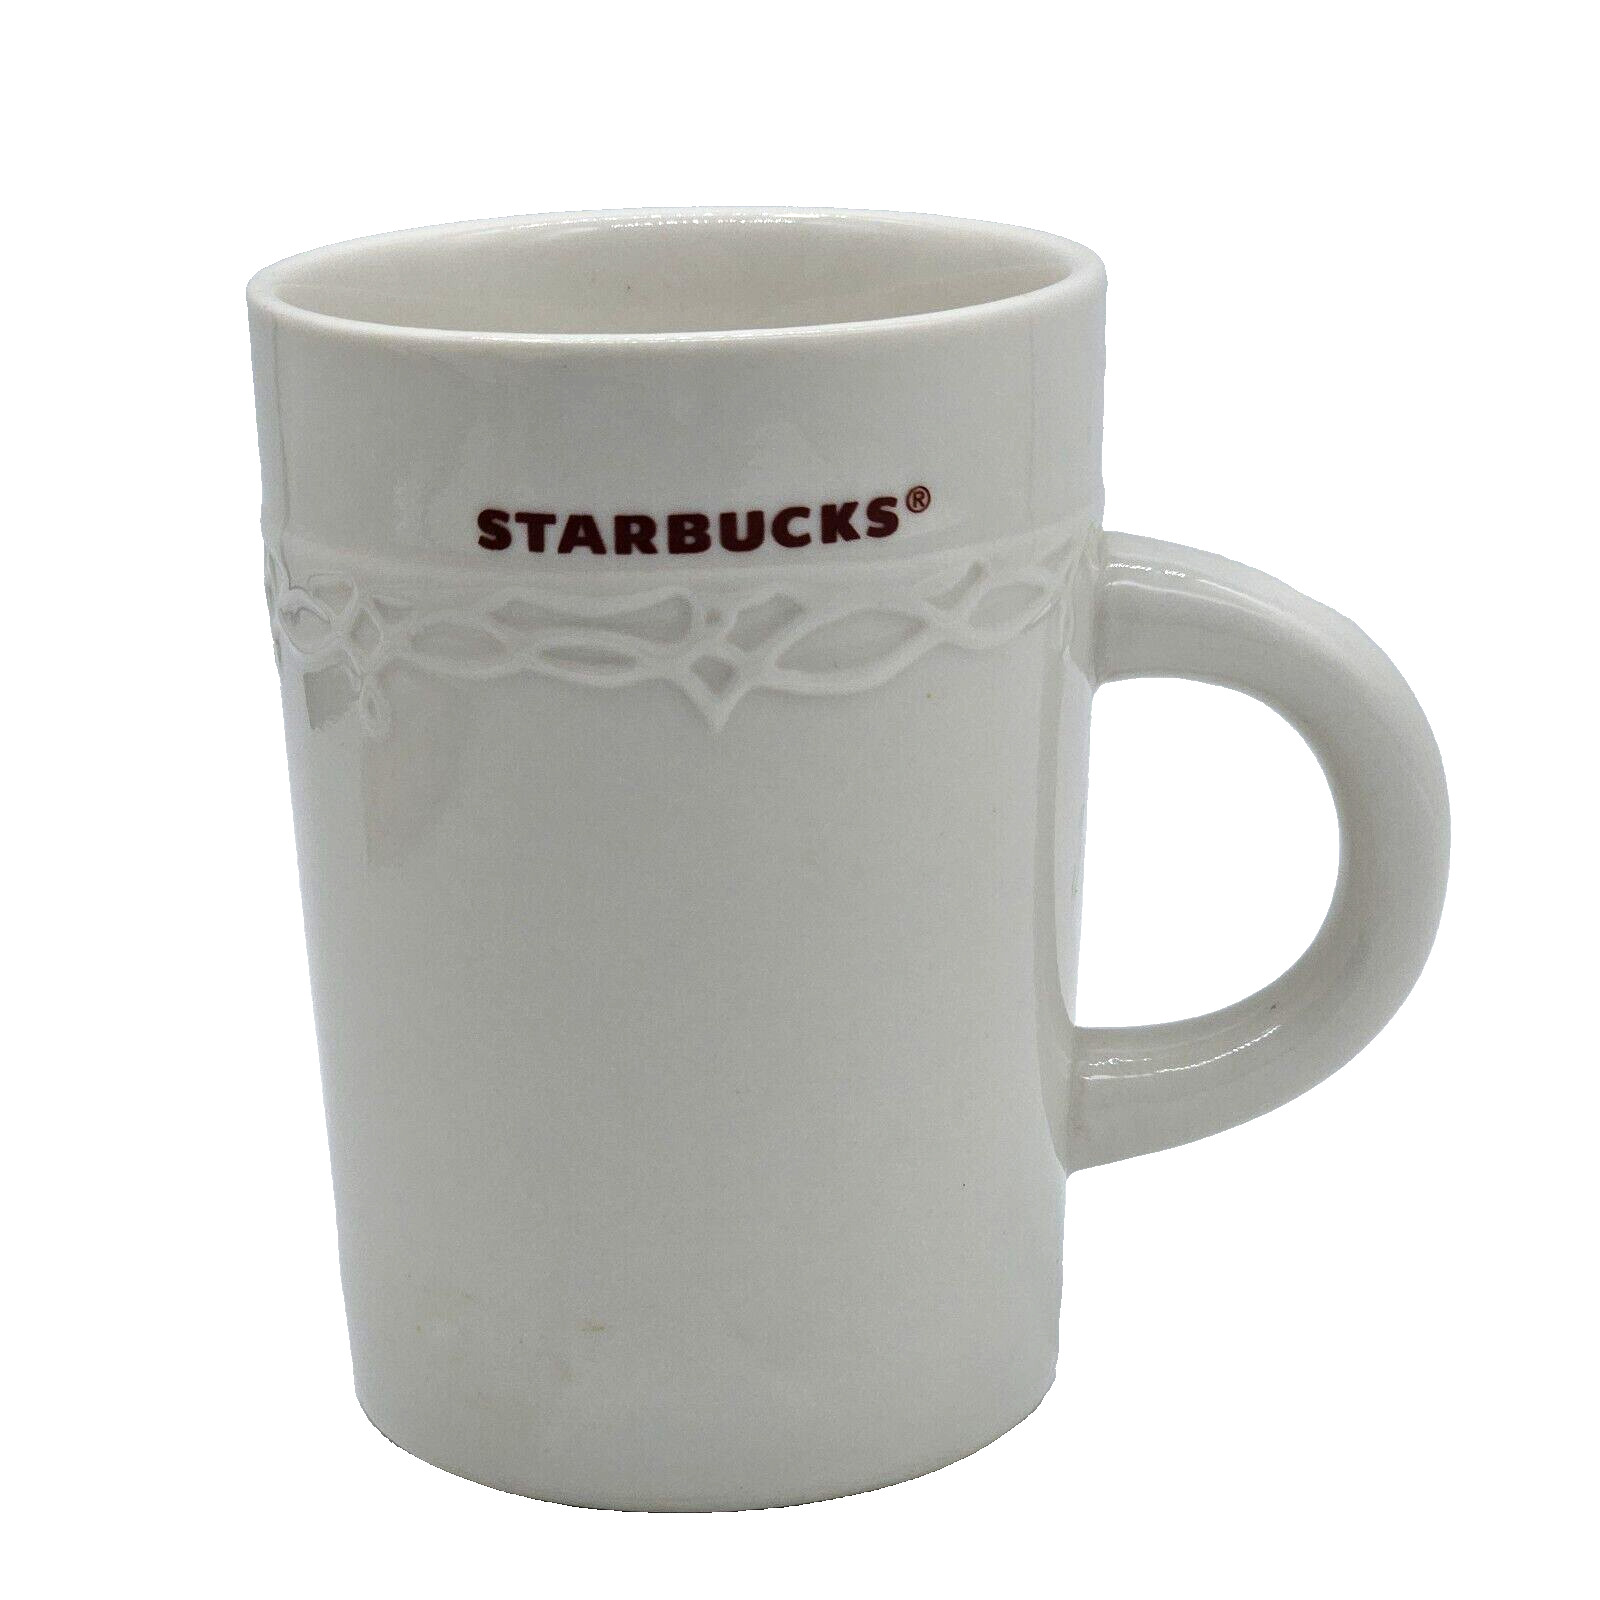 2010 Starbucks Red Logo White Embossed Raised Design Ceramic Coffee Mug 10oz Cup